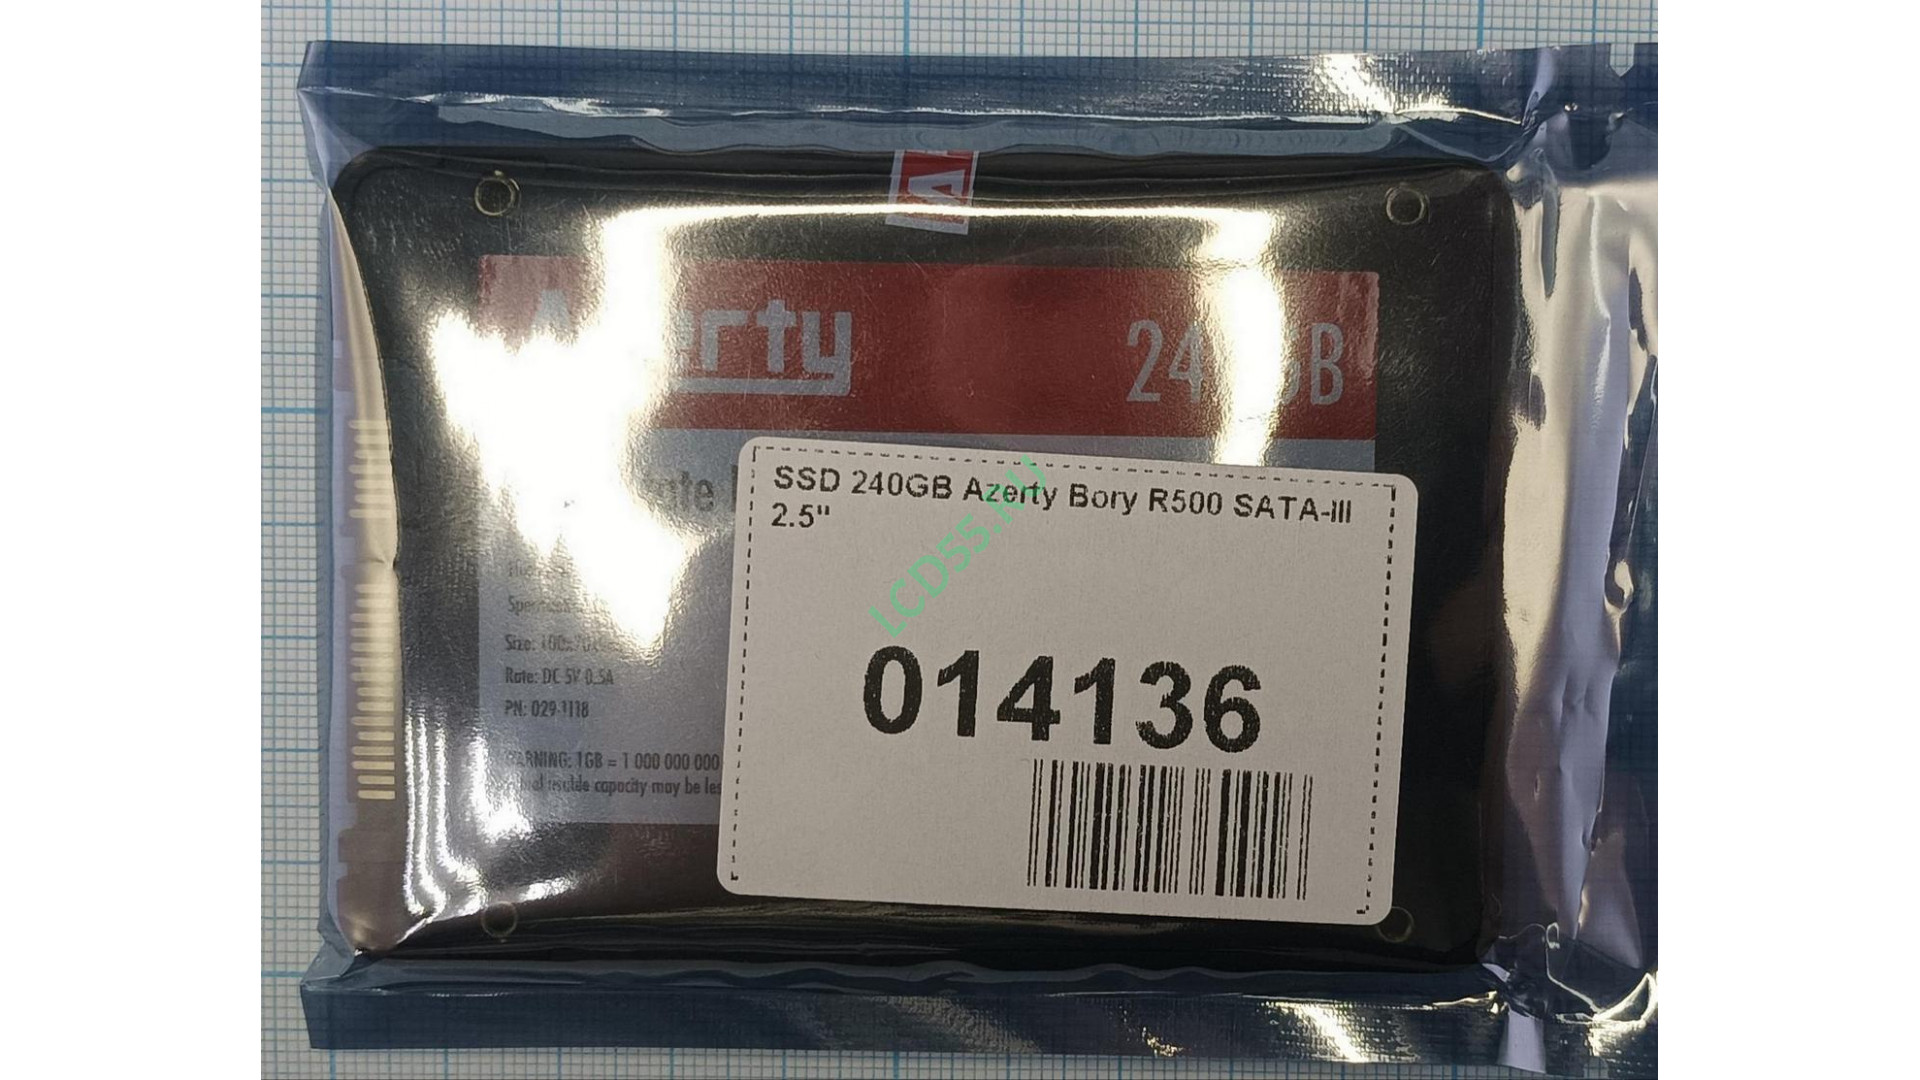 SSD 240GB Azerty Bory R500 SATA-III 2.5"